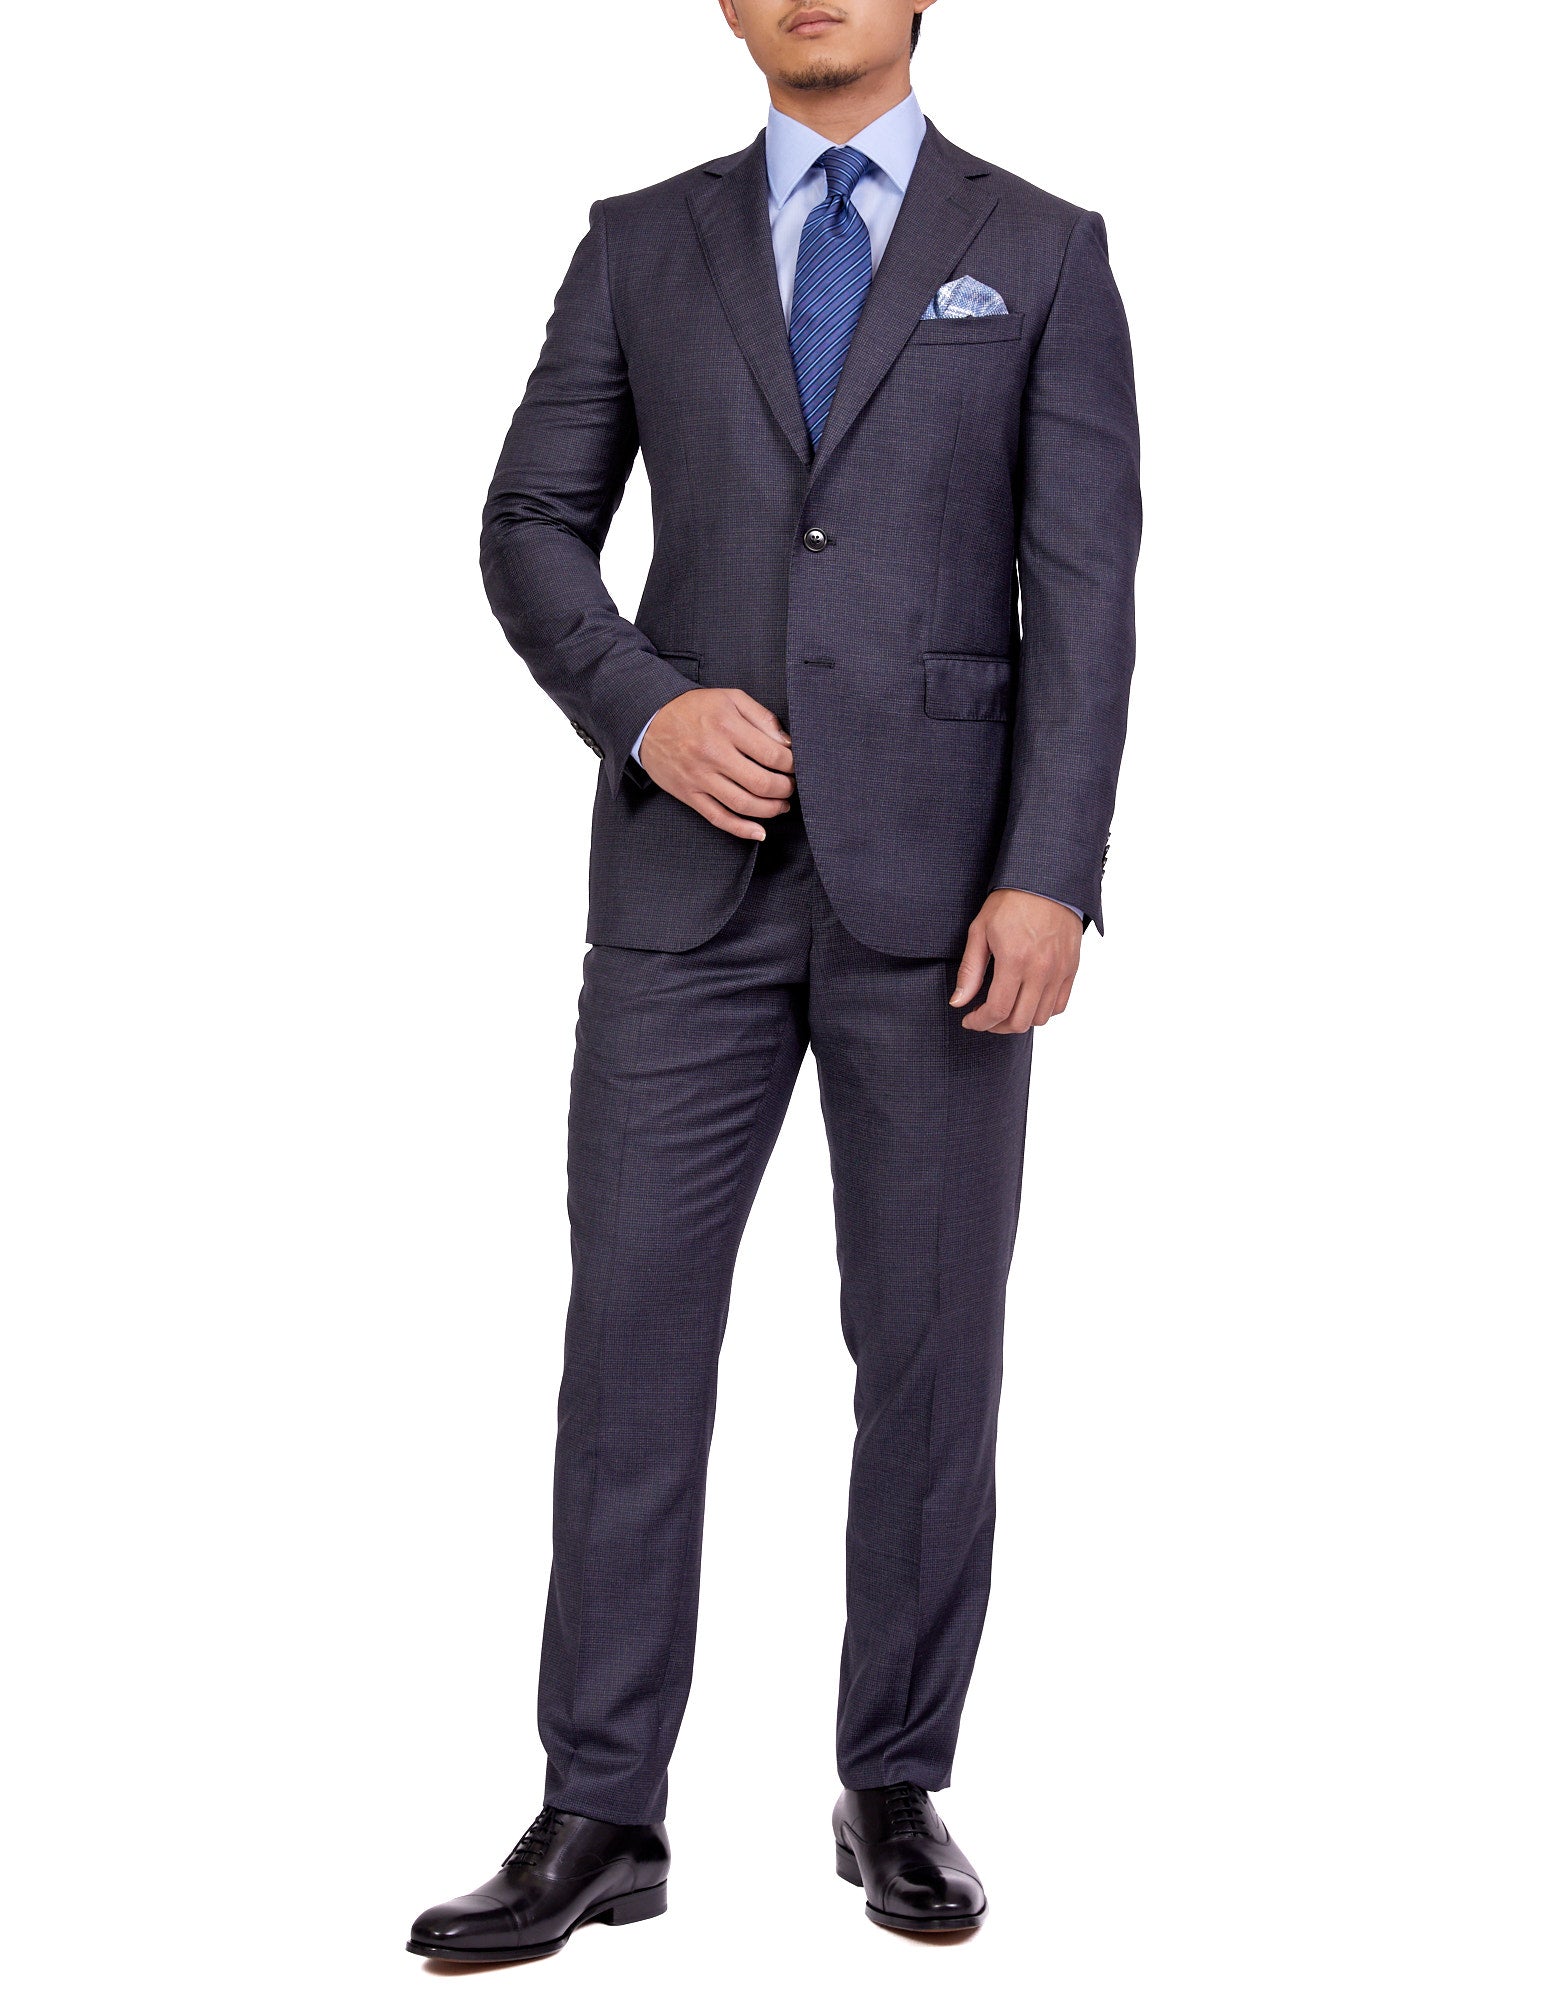 Henry Sartorial Rochdale Suit Charcoal/Cobalt REG